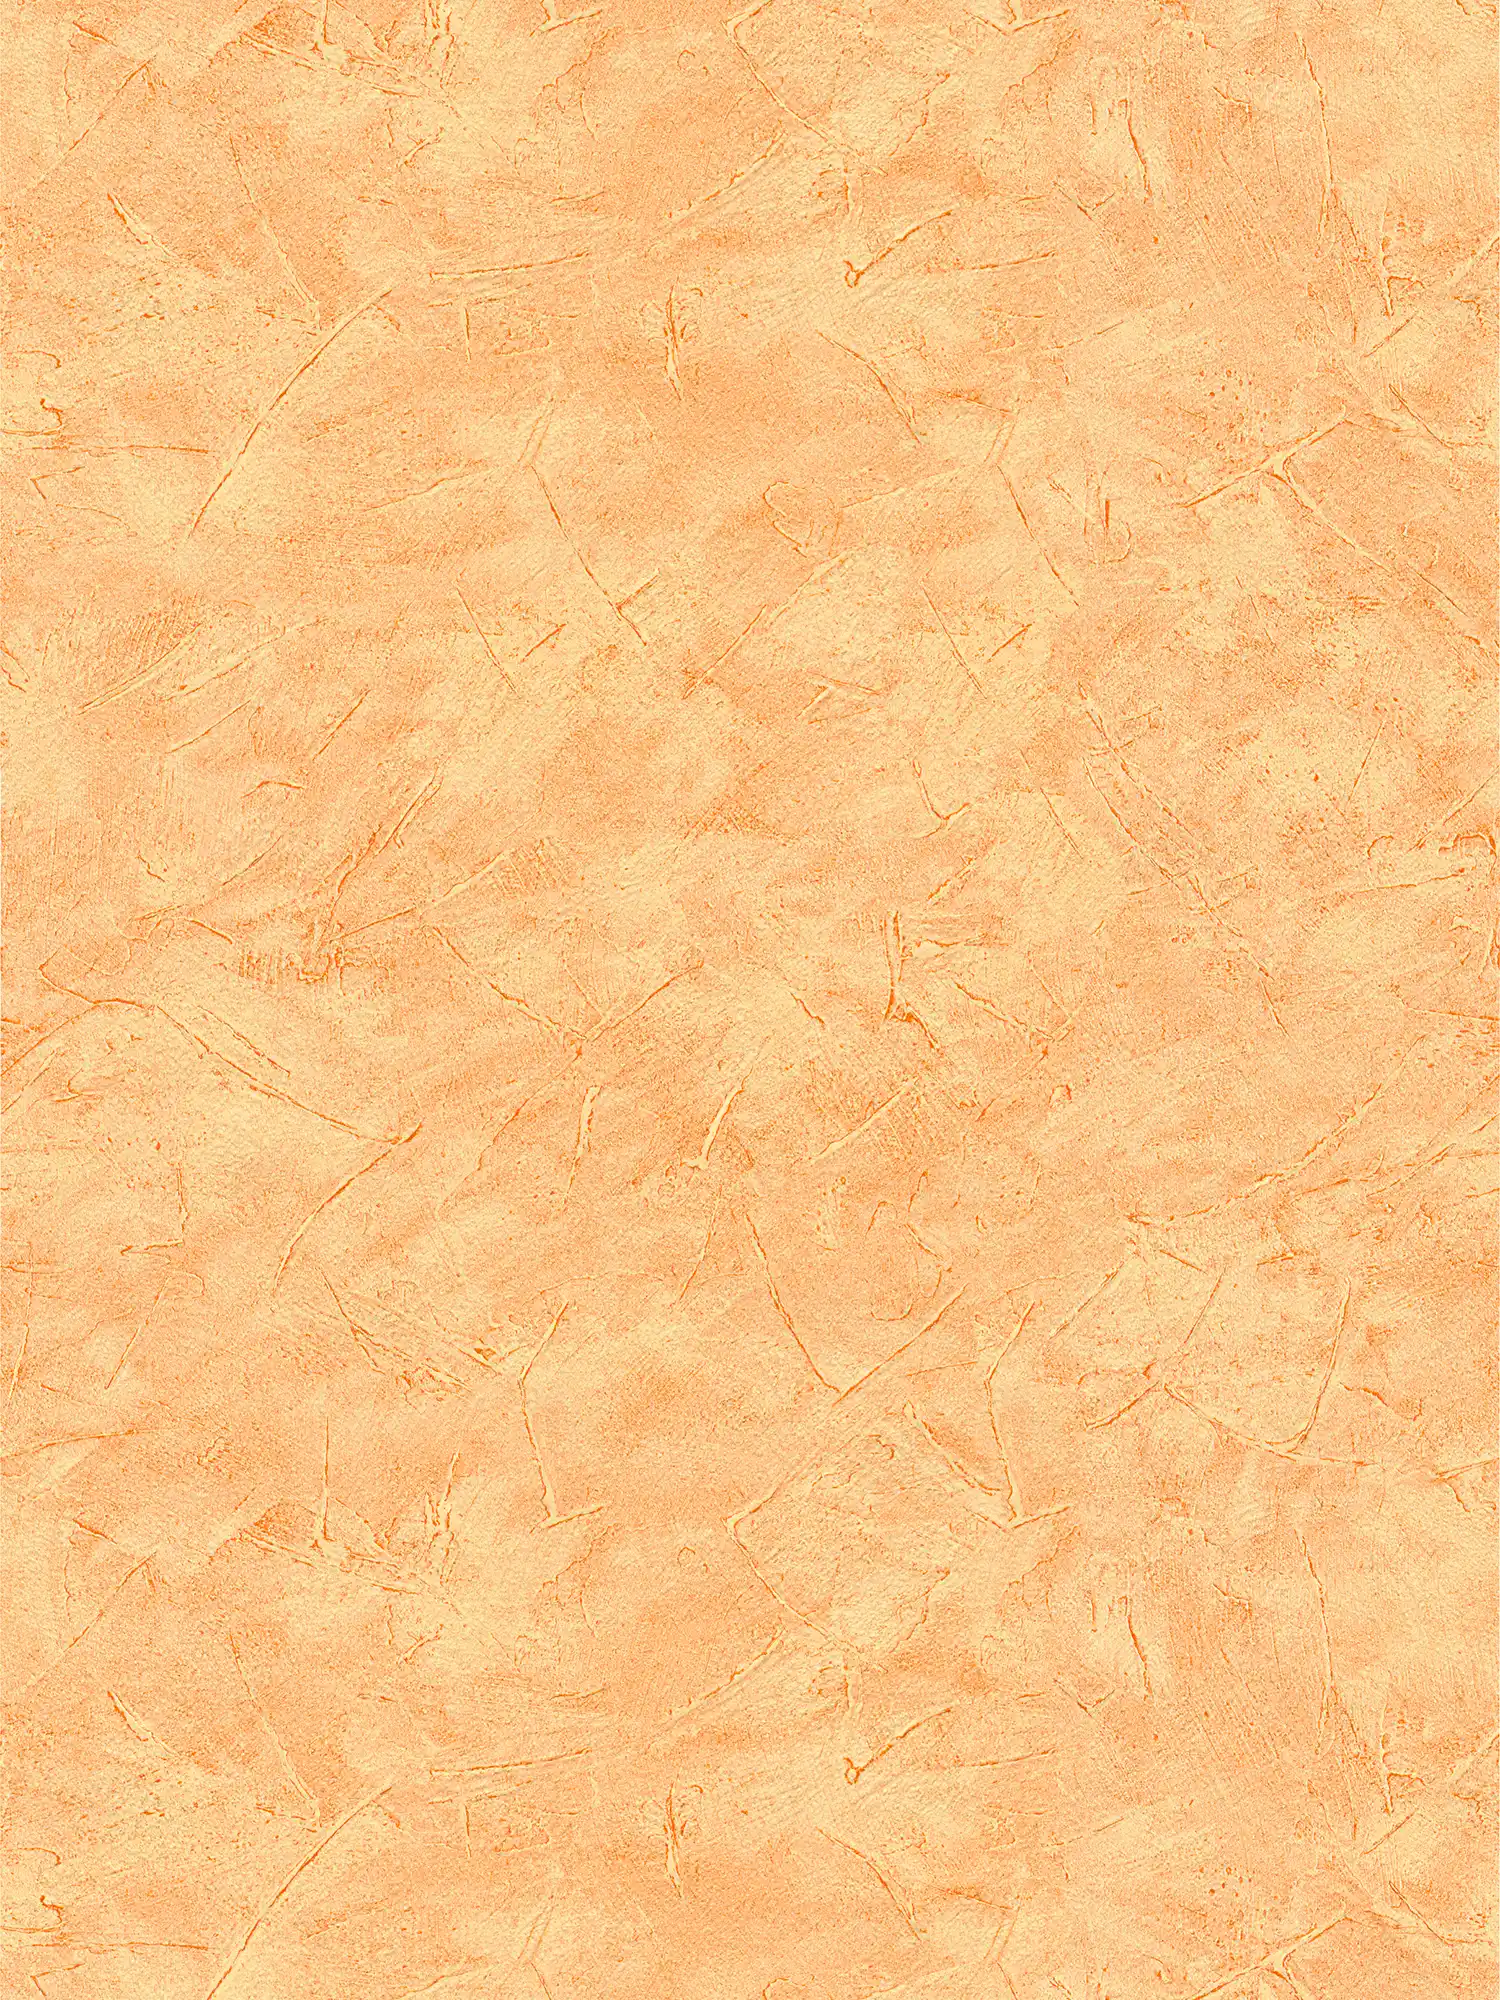 Plaster optics wallpaper with wipe look & hatch pattern - orange
